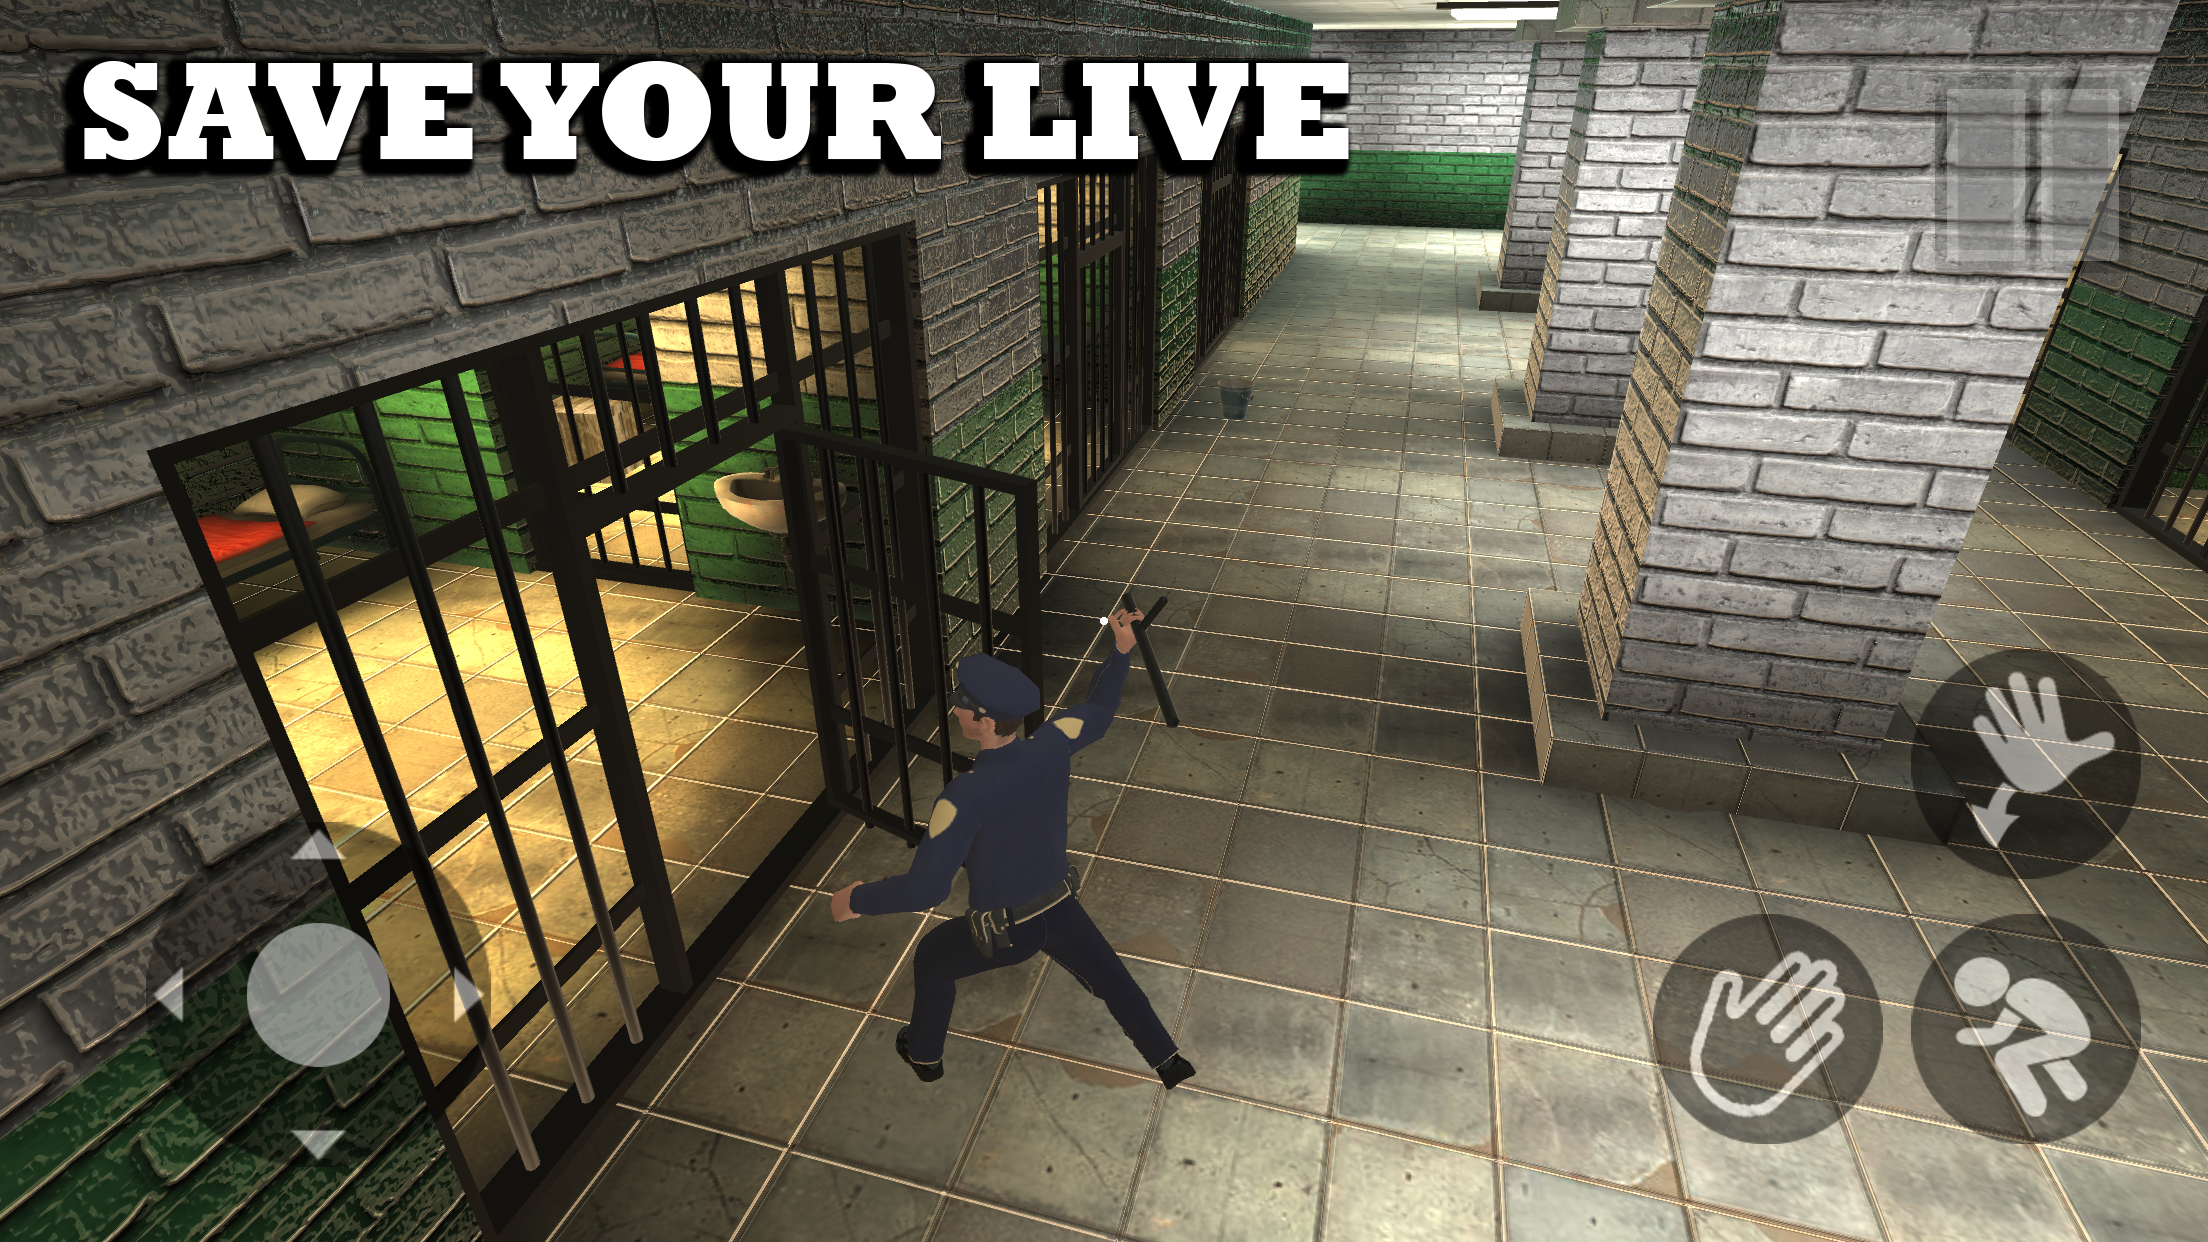 Escape Prison 2 APK for Android Download